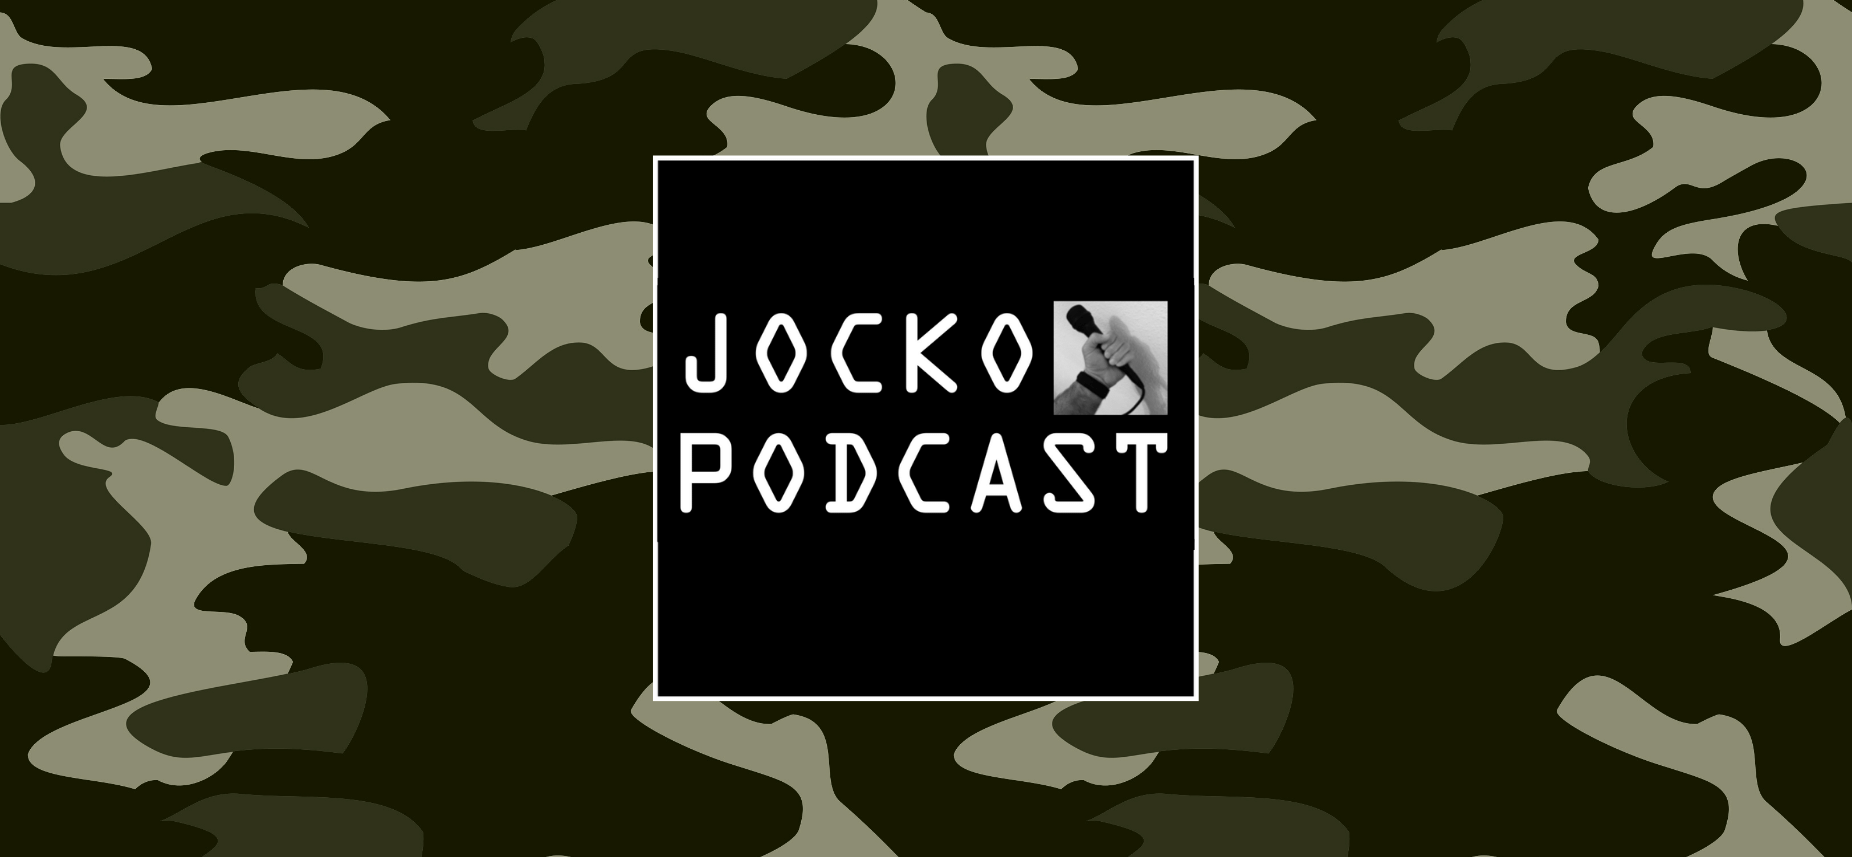 best jocko podcast war stories